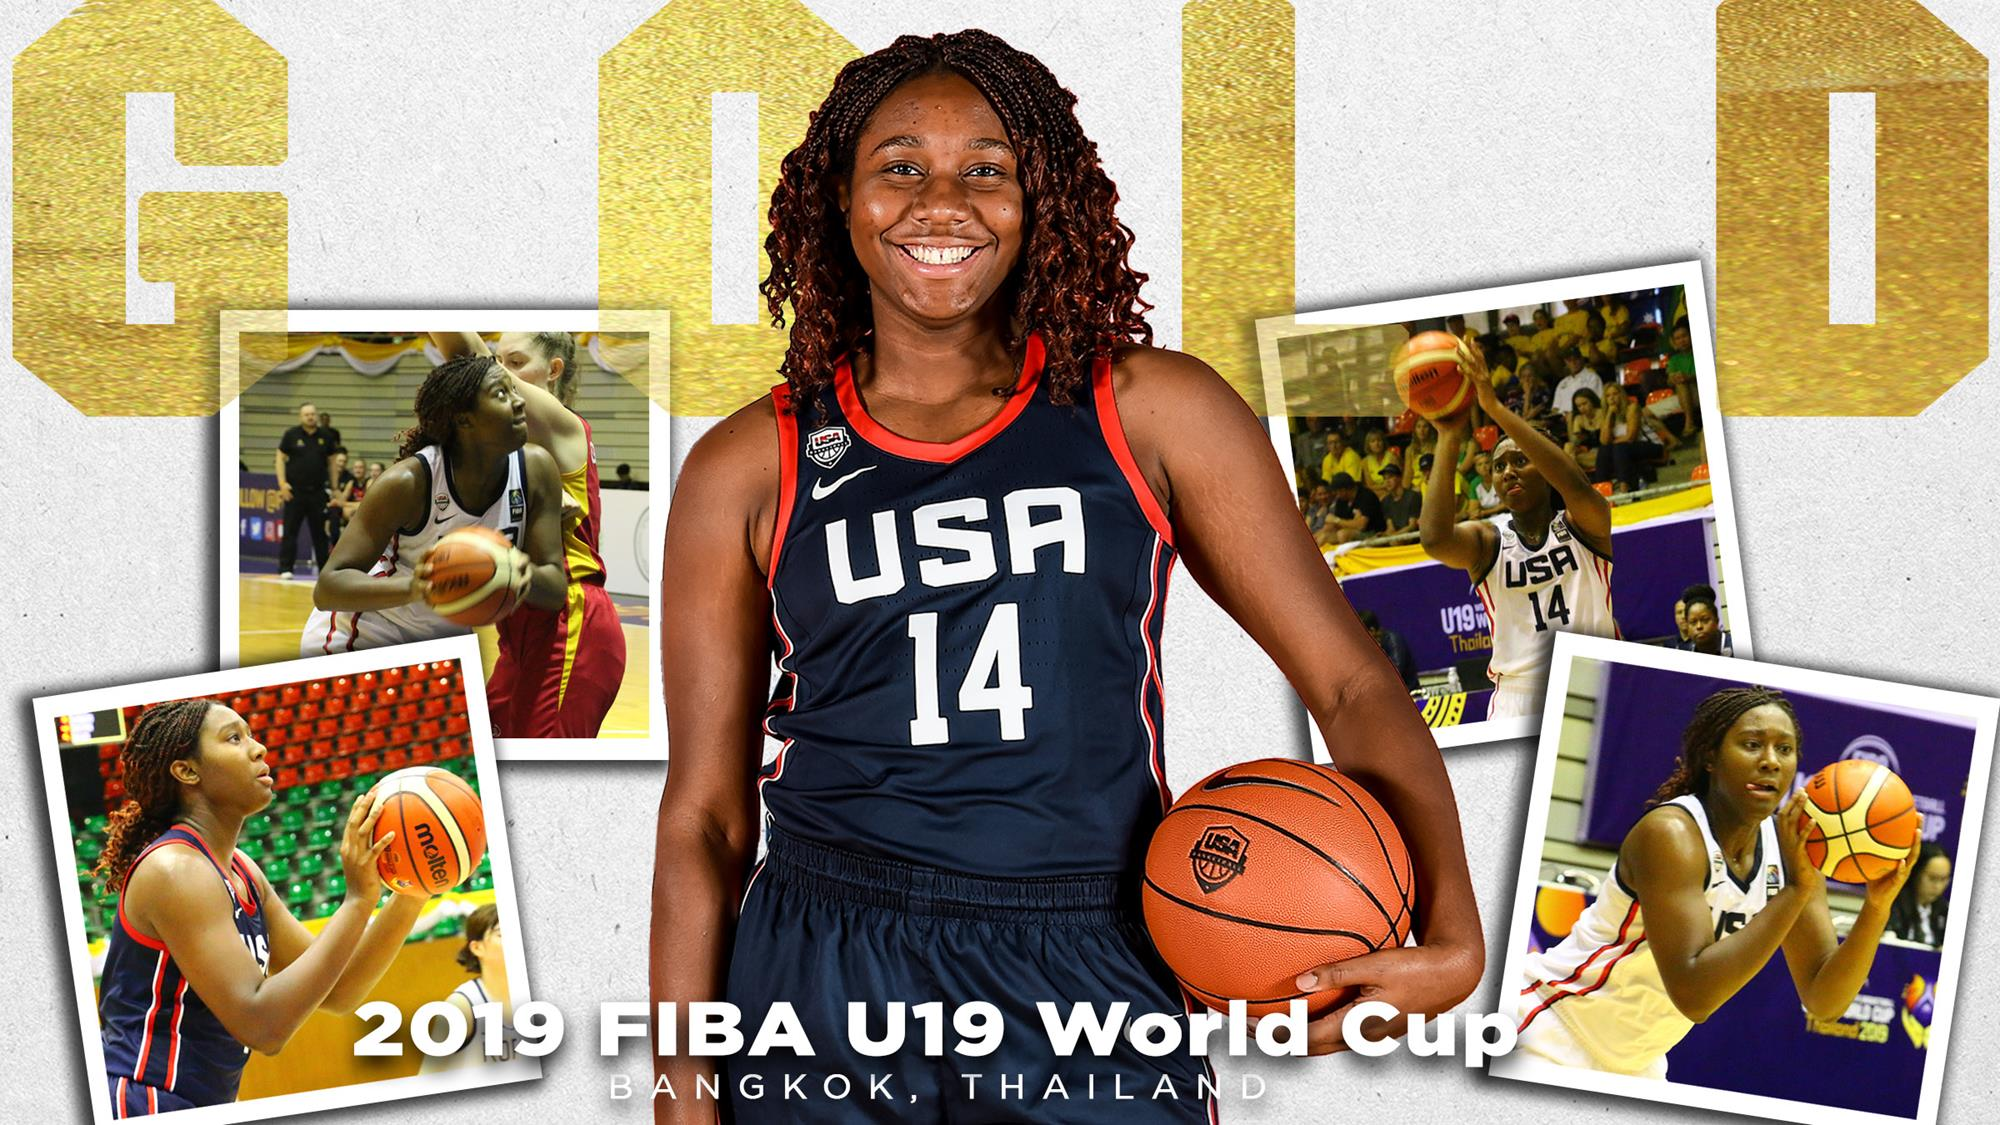 Boston’s Double-Double Helps U.S. to FIBA U19 Gold